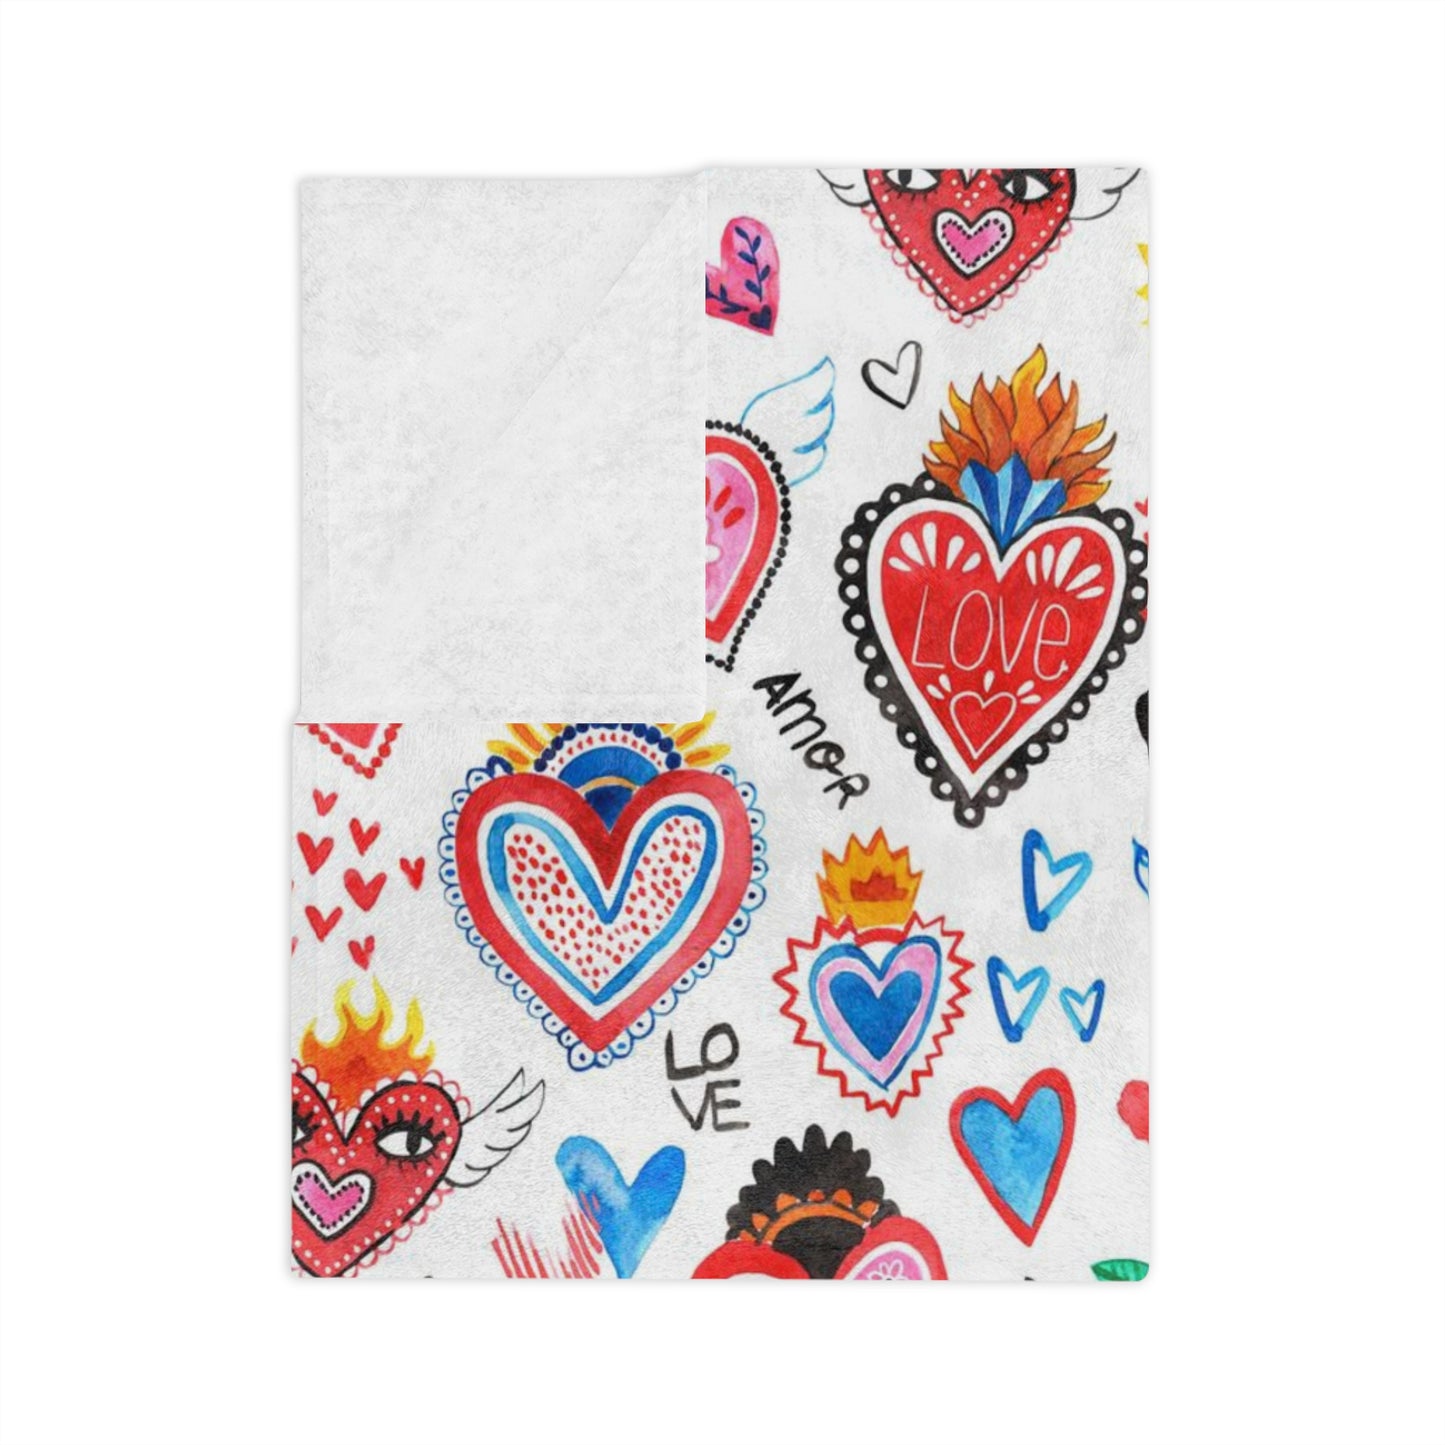 Cute sacred hearts Velveteen Minky Blanket. Sagrado corazon blanket for her. Mexican folk art